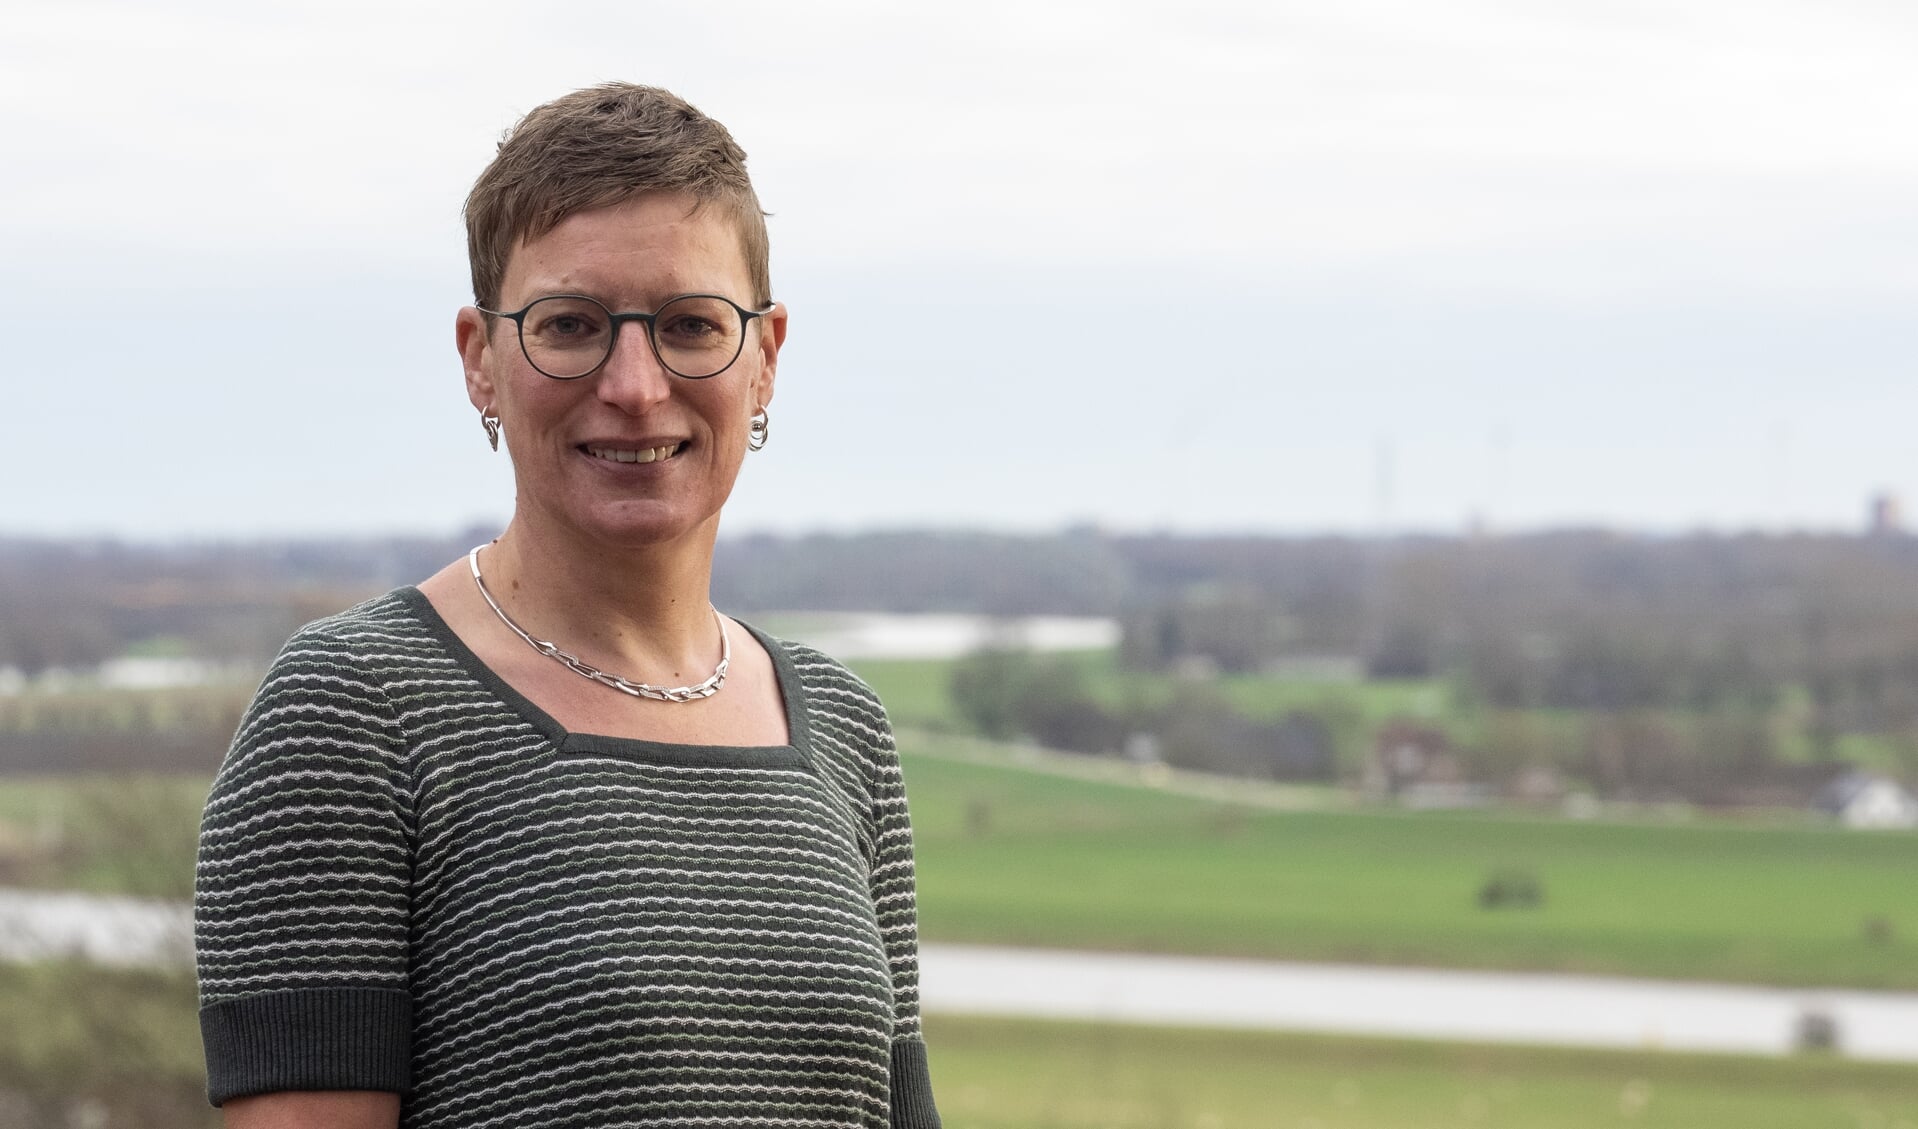 Marieke van de Beek - Lindhout
Kandidaat Statenlid ChristenUnie Gelderland